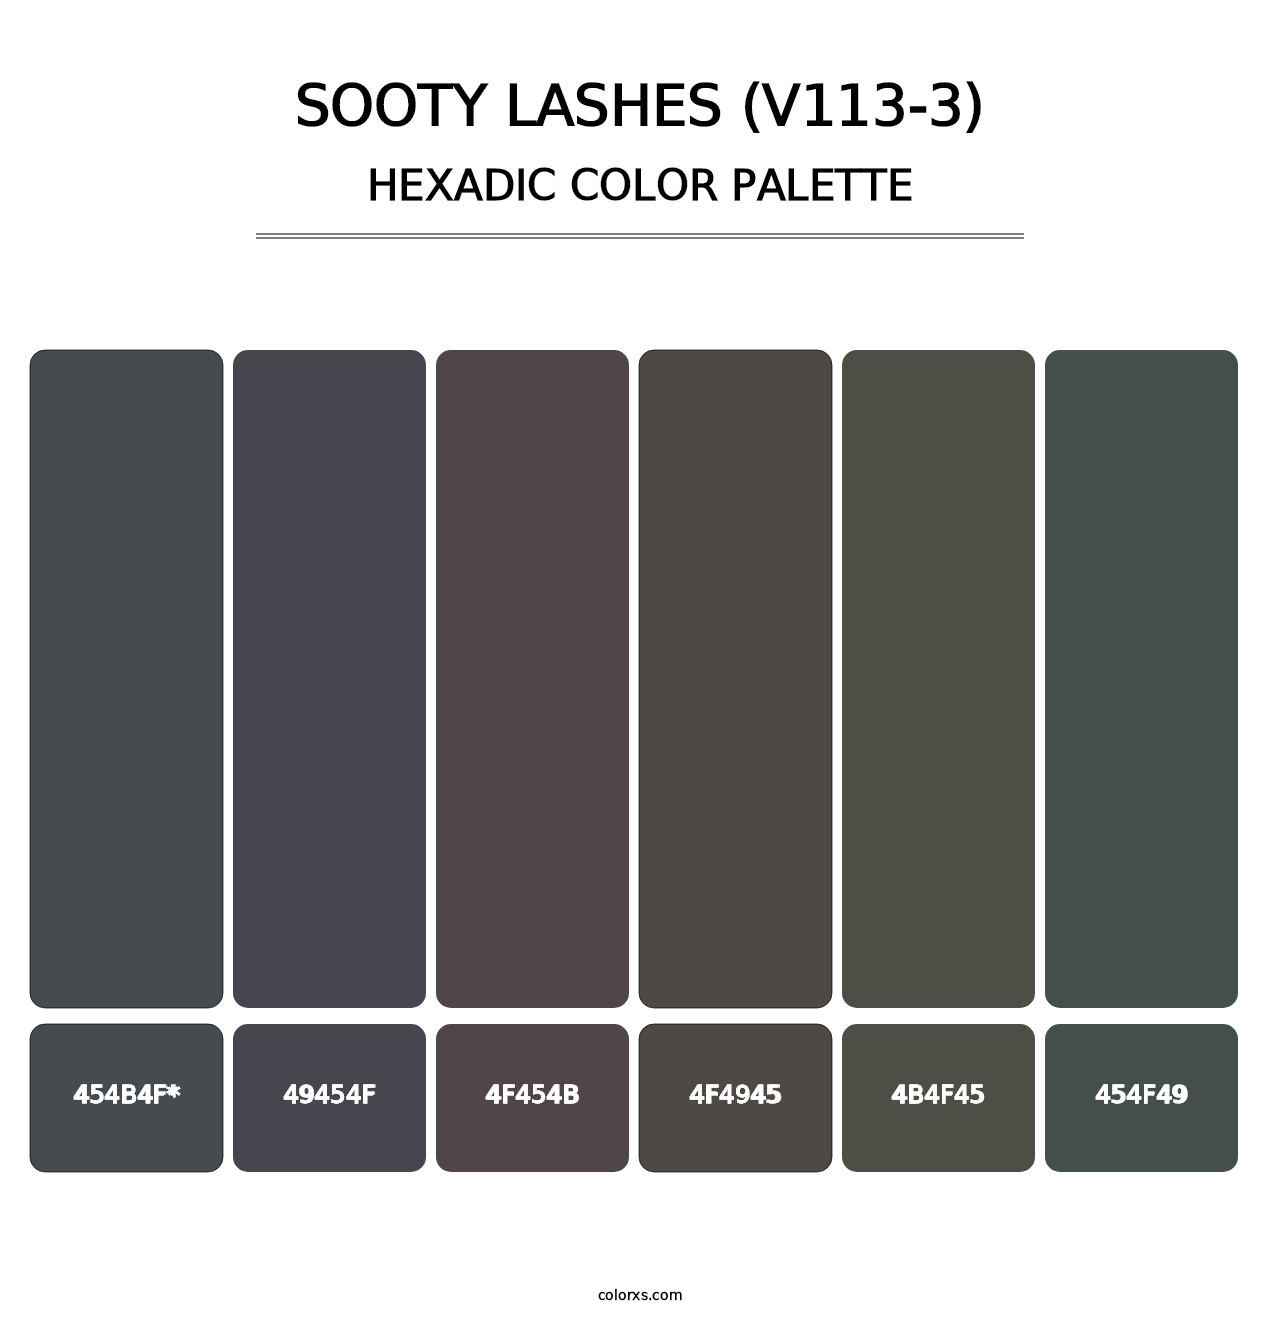 Sooty Lashes (V113-3) - Hexadic Color Palette